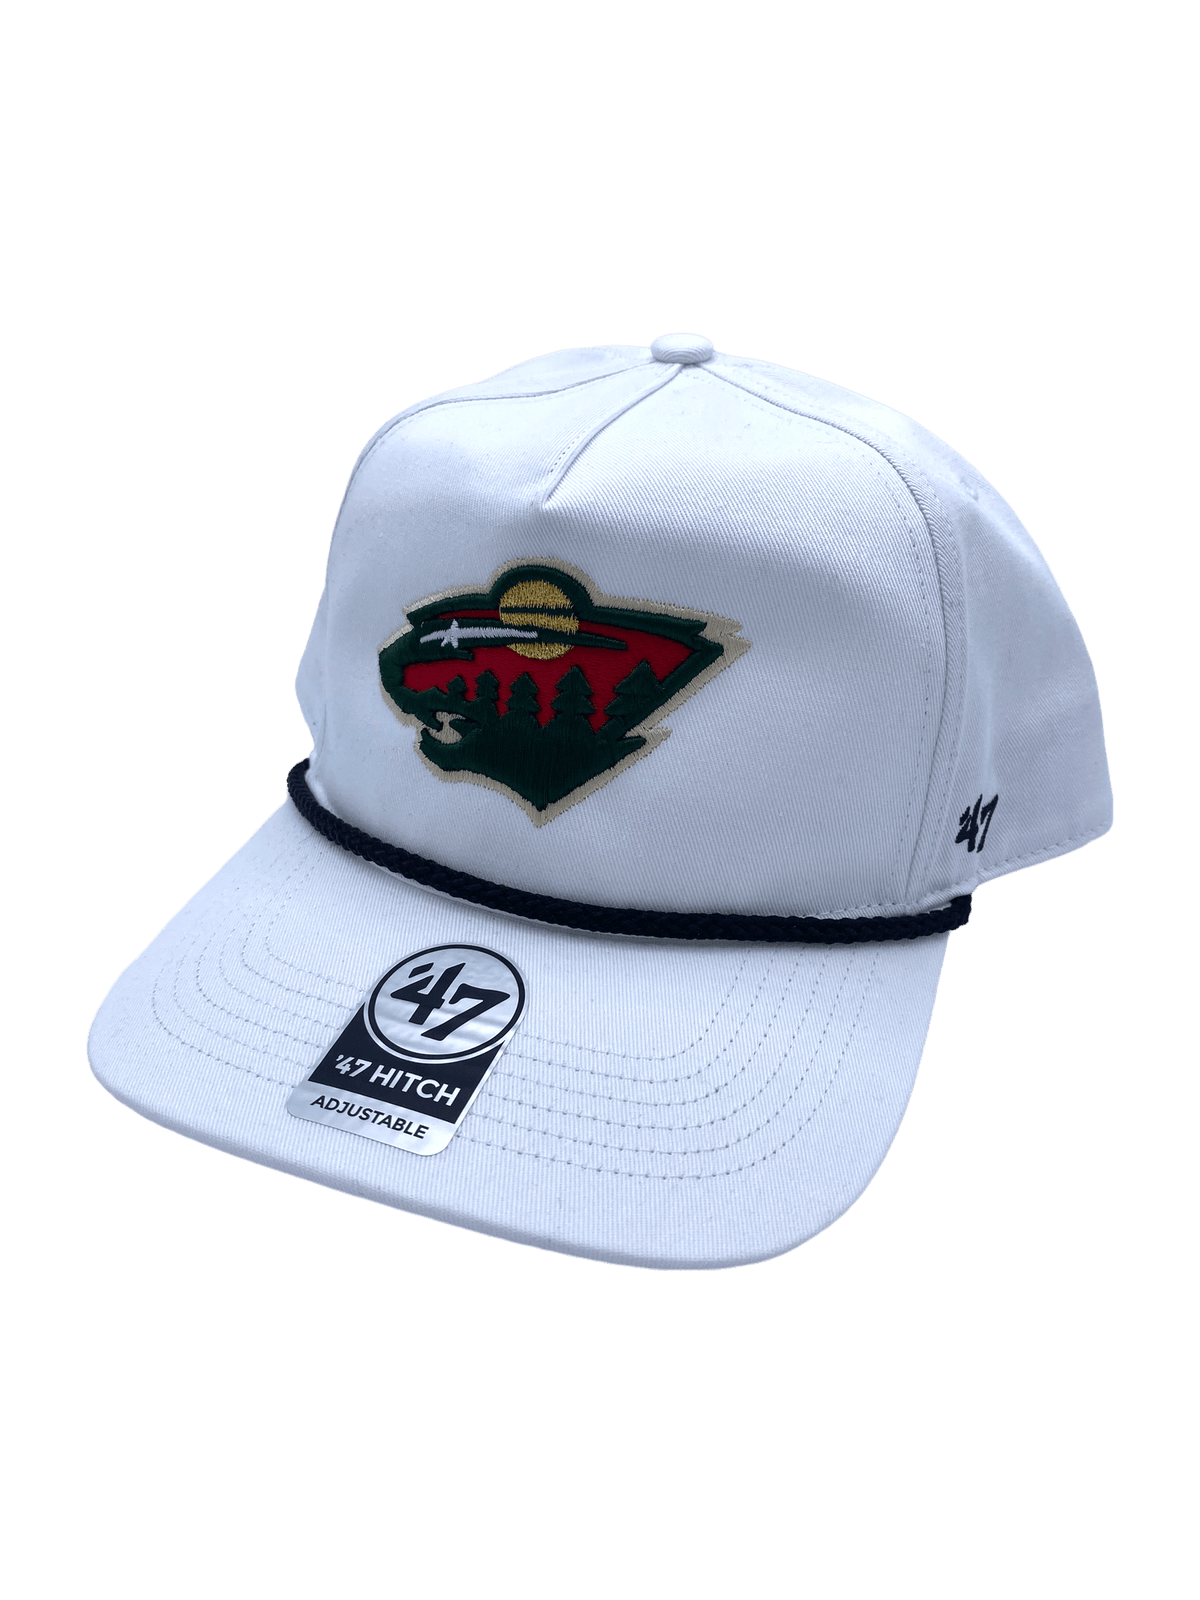 Minnesota Wild '47 White Rope Hitch Adjustable Snapback Hat